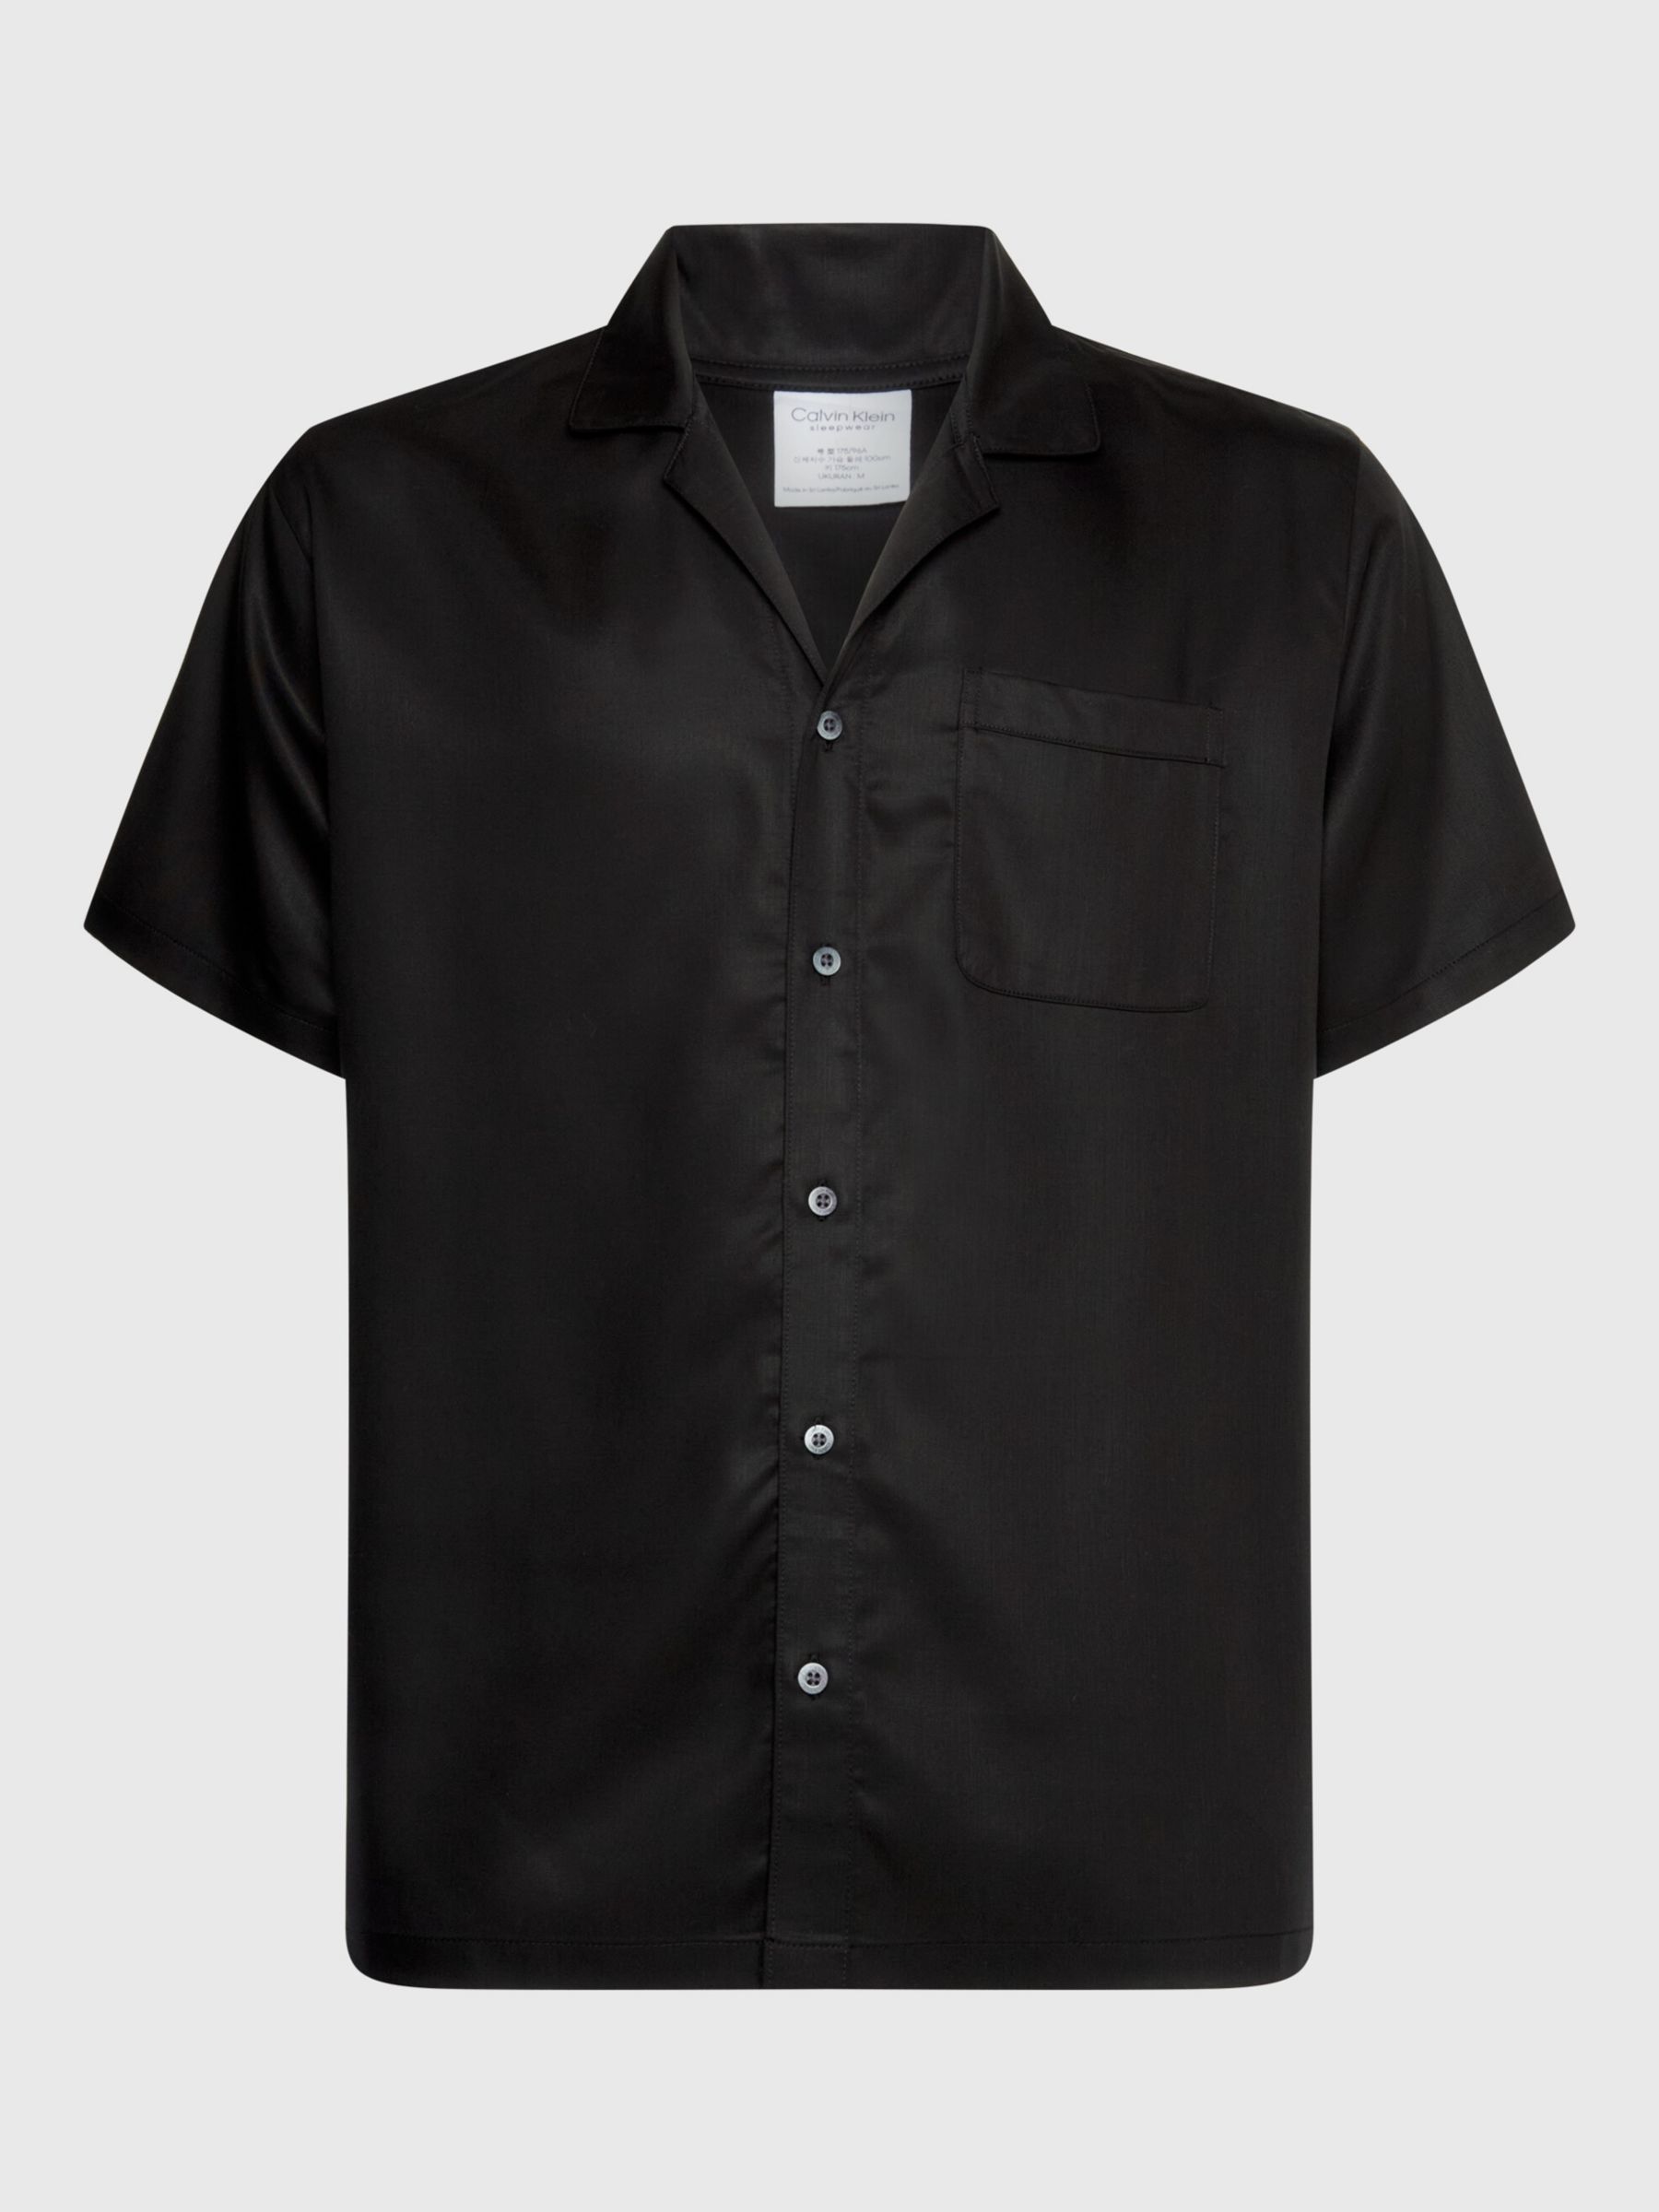 Calvin Klein Short Sleeve Lounge Shirt, Black